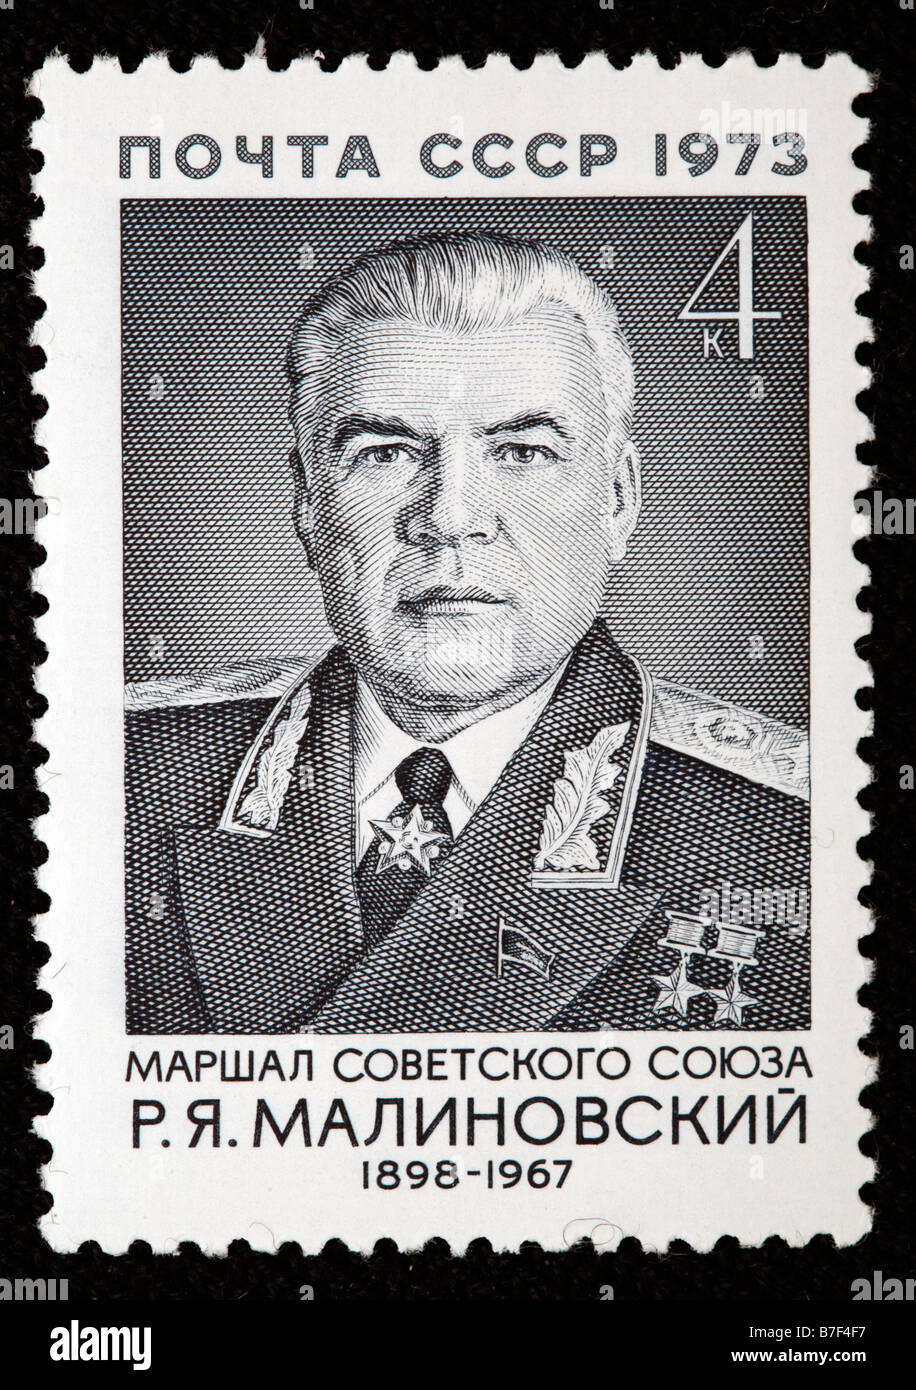 Rodion Malinovsky (1898-1967), sowjetischer militärischer Kommandant, Marschall, Porto Stempel, UdSSR, Russland, 1973 Stockfoto